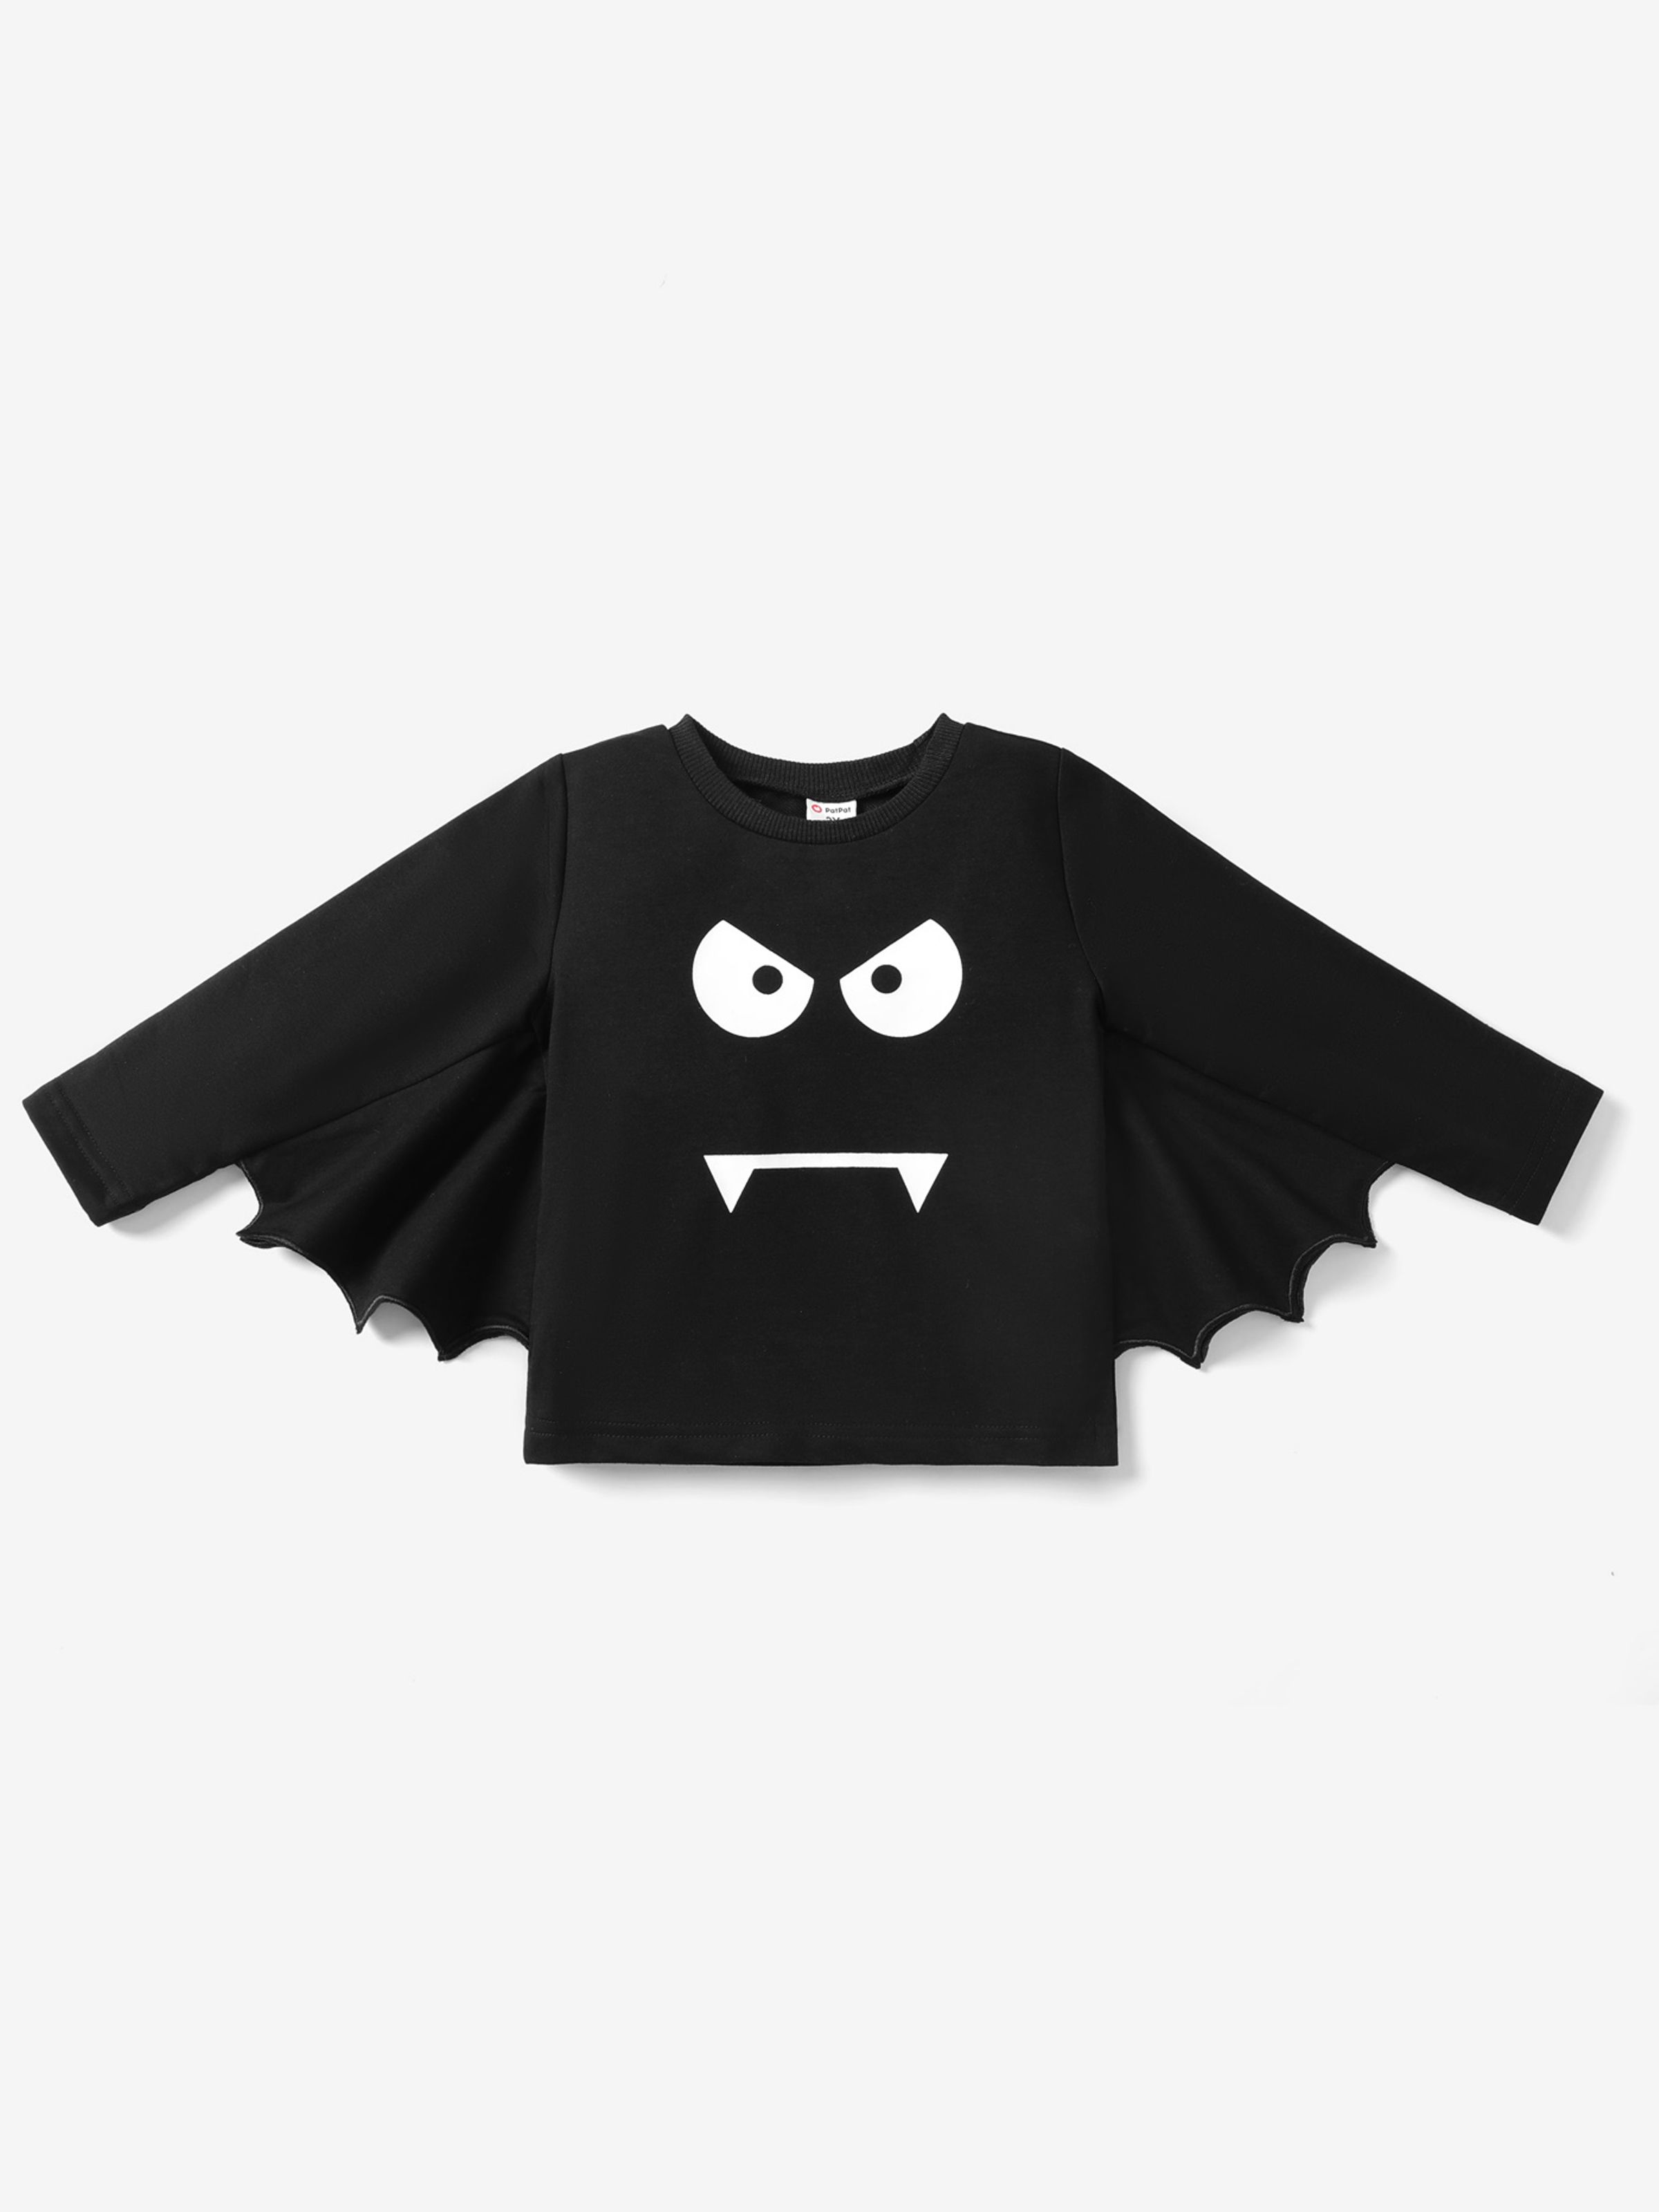 

Unisex Toddler Avant-garde Halloween Design Tops